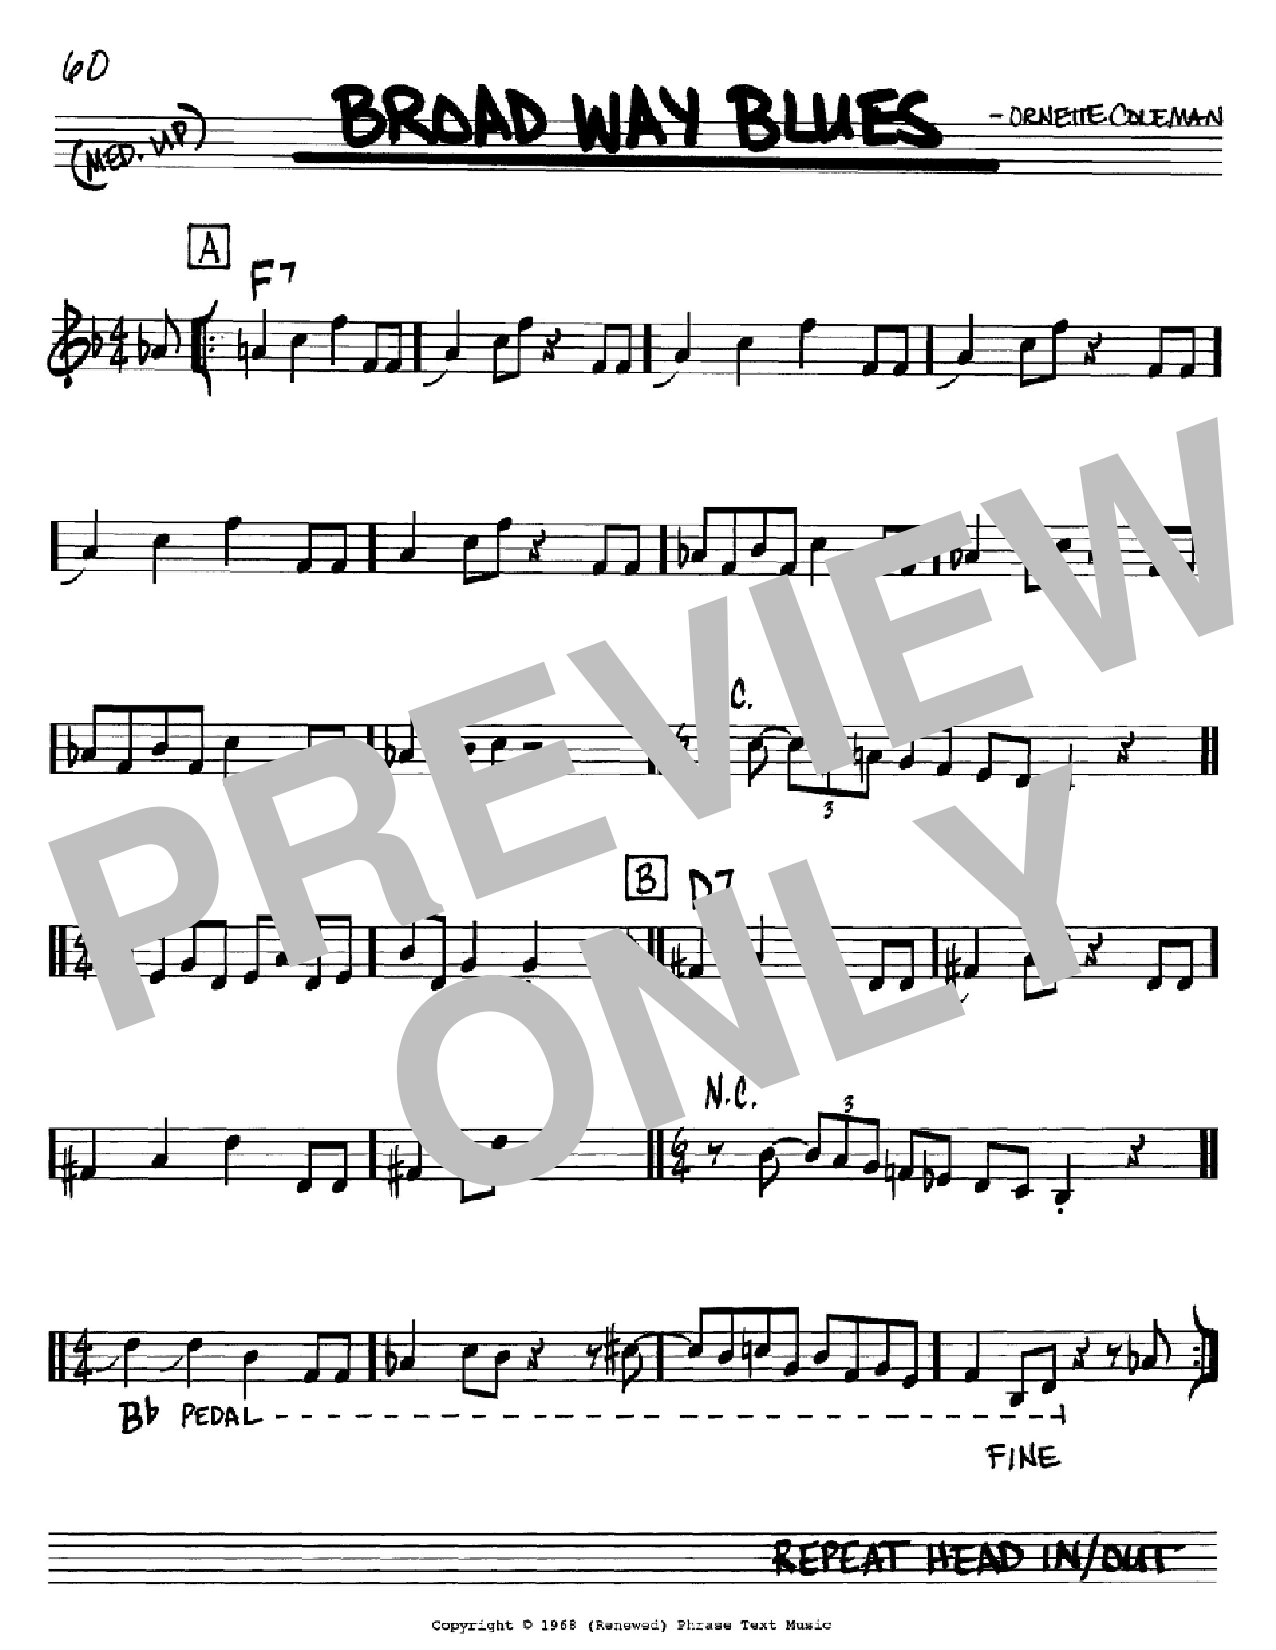 Download Ornette Coleman Broad Way Blues Sheet Music